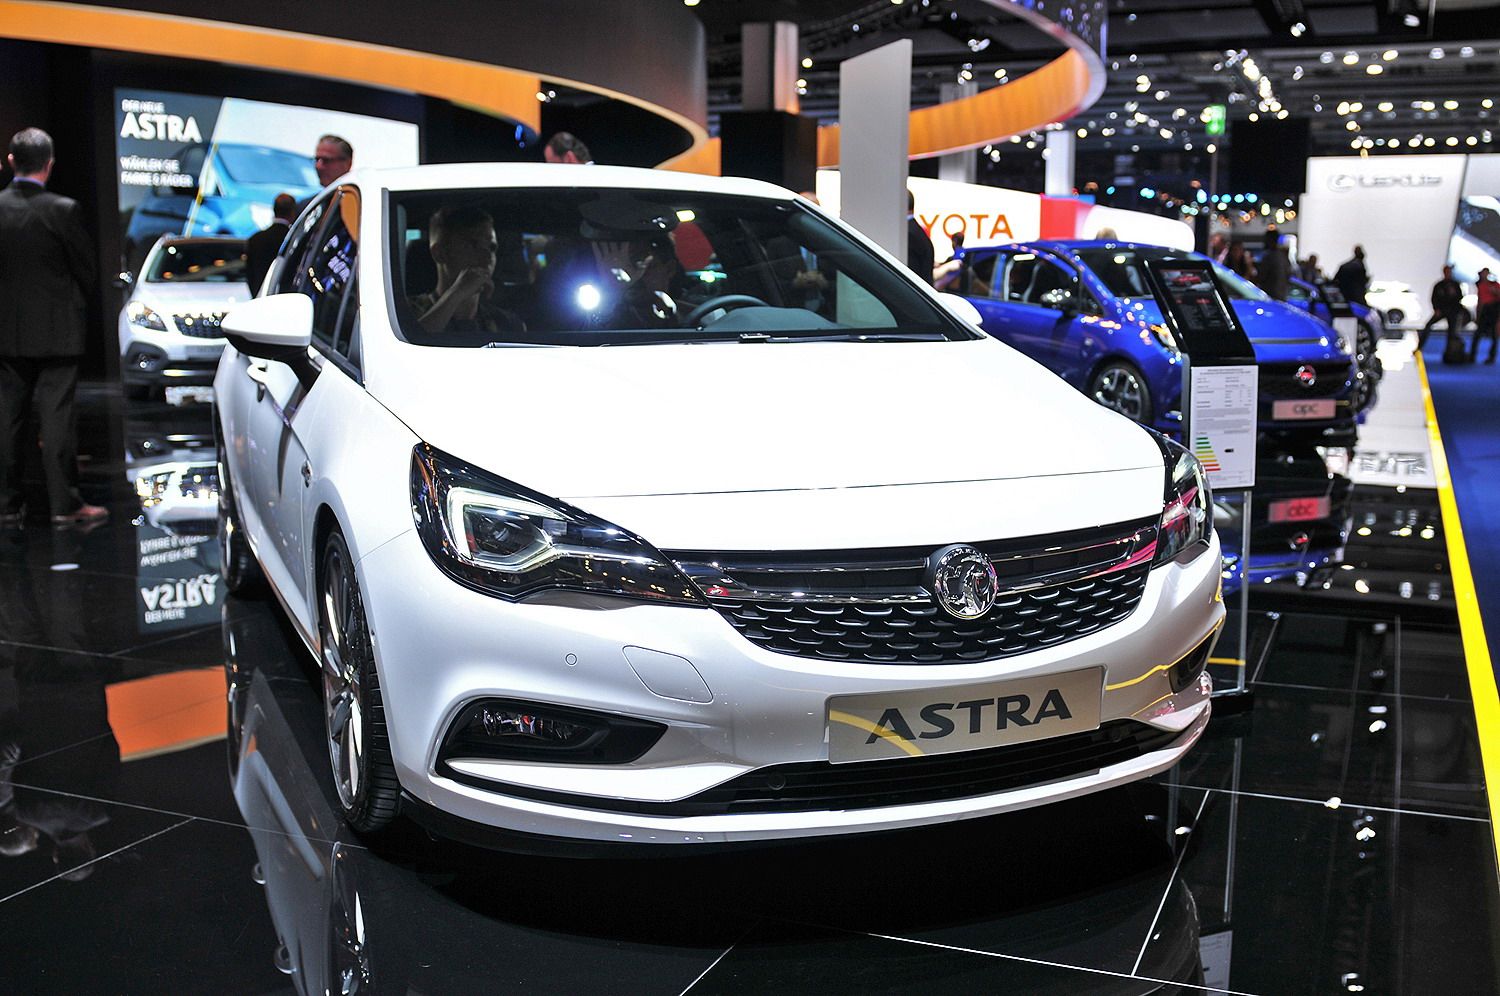 2016 Opel Astra